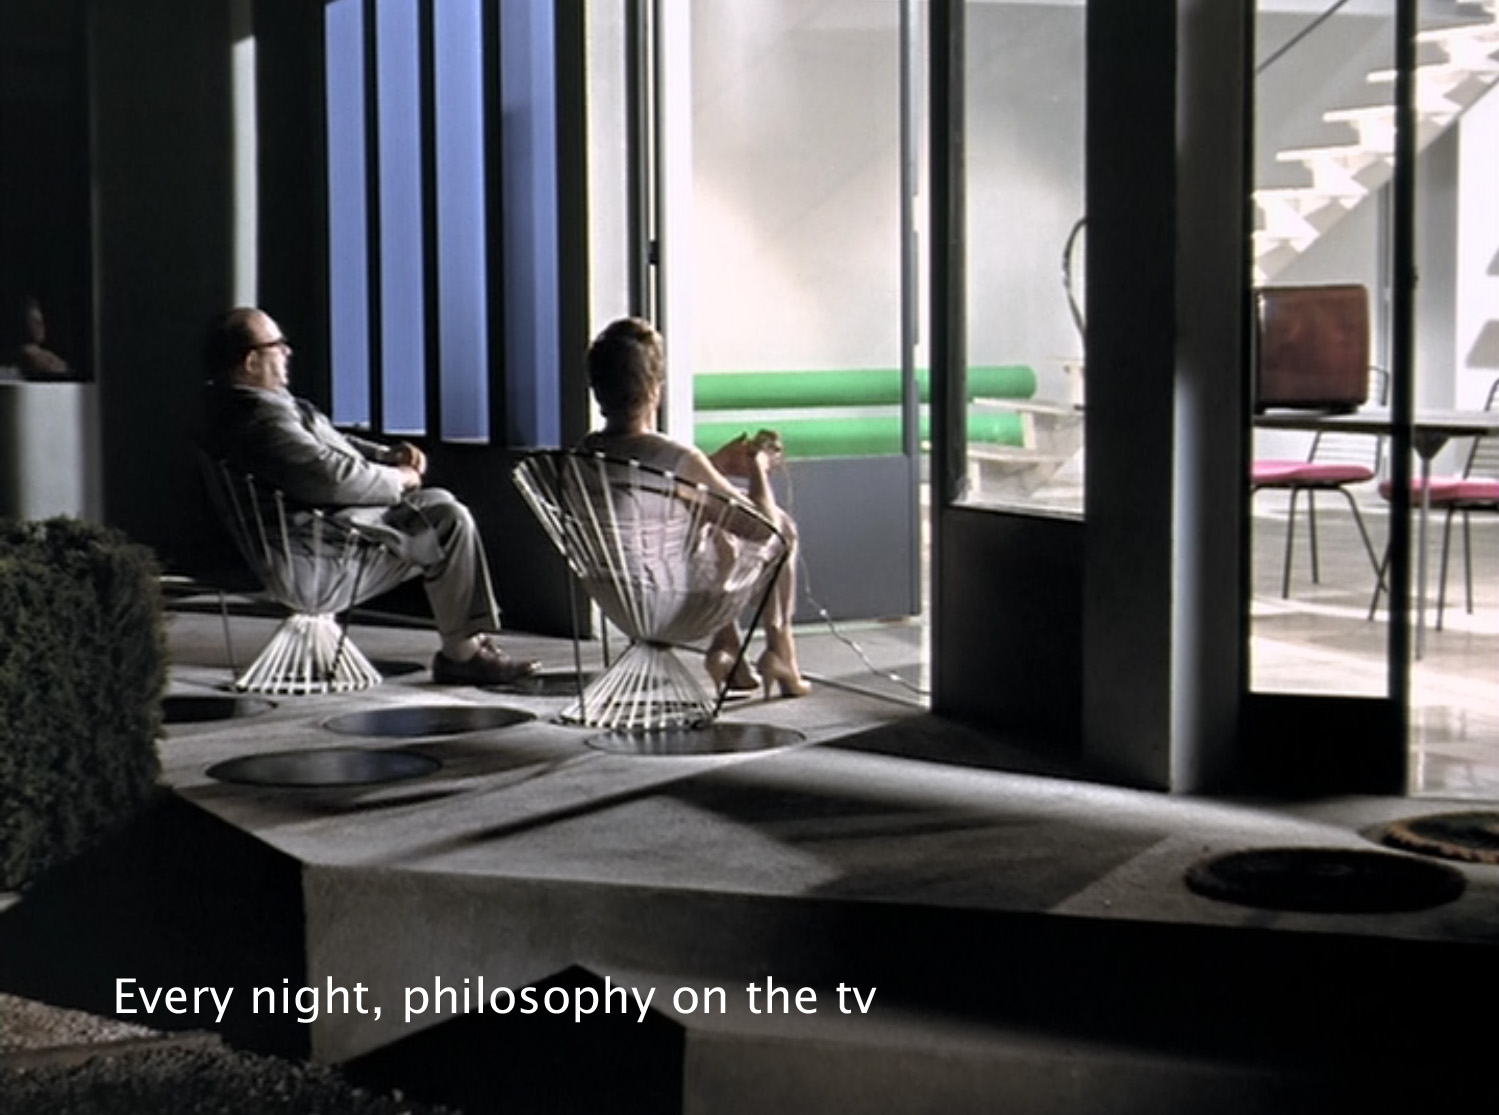 Every night, philosophy on the tv